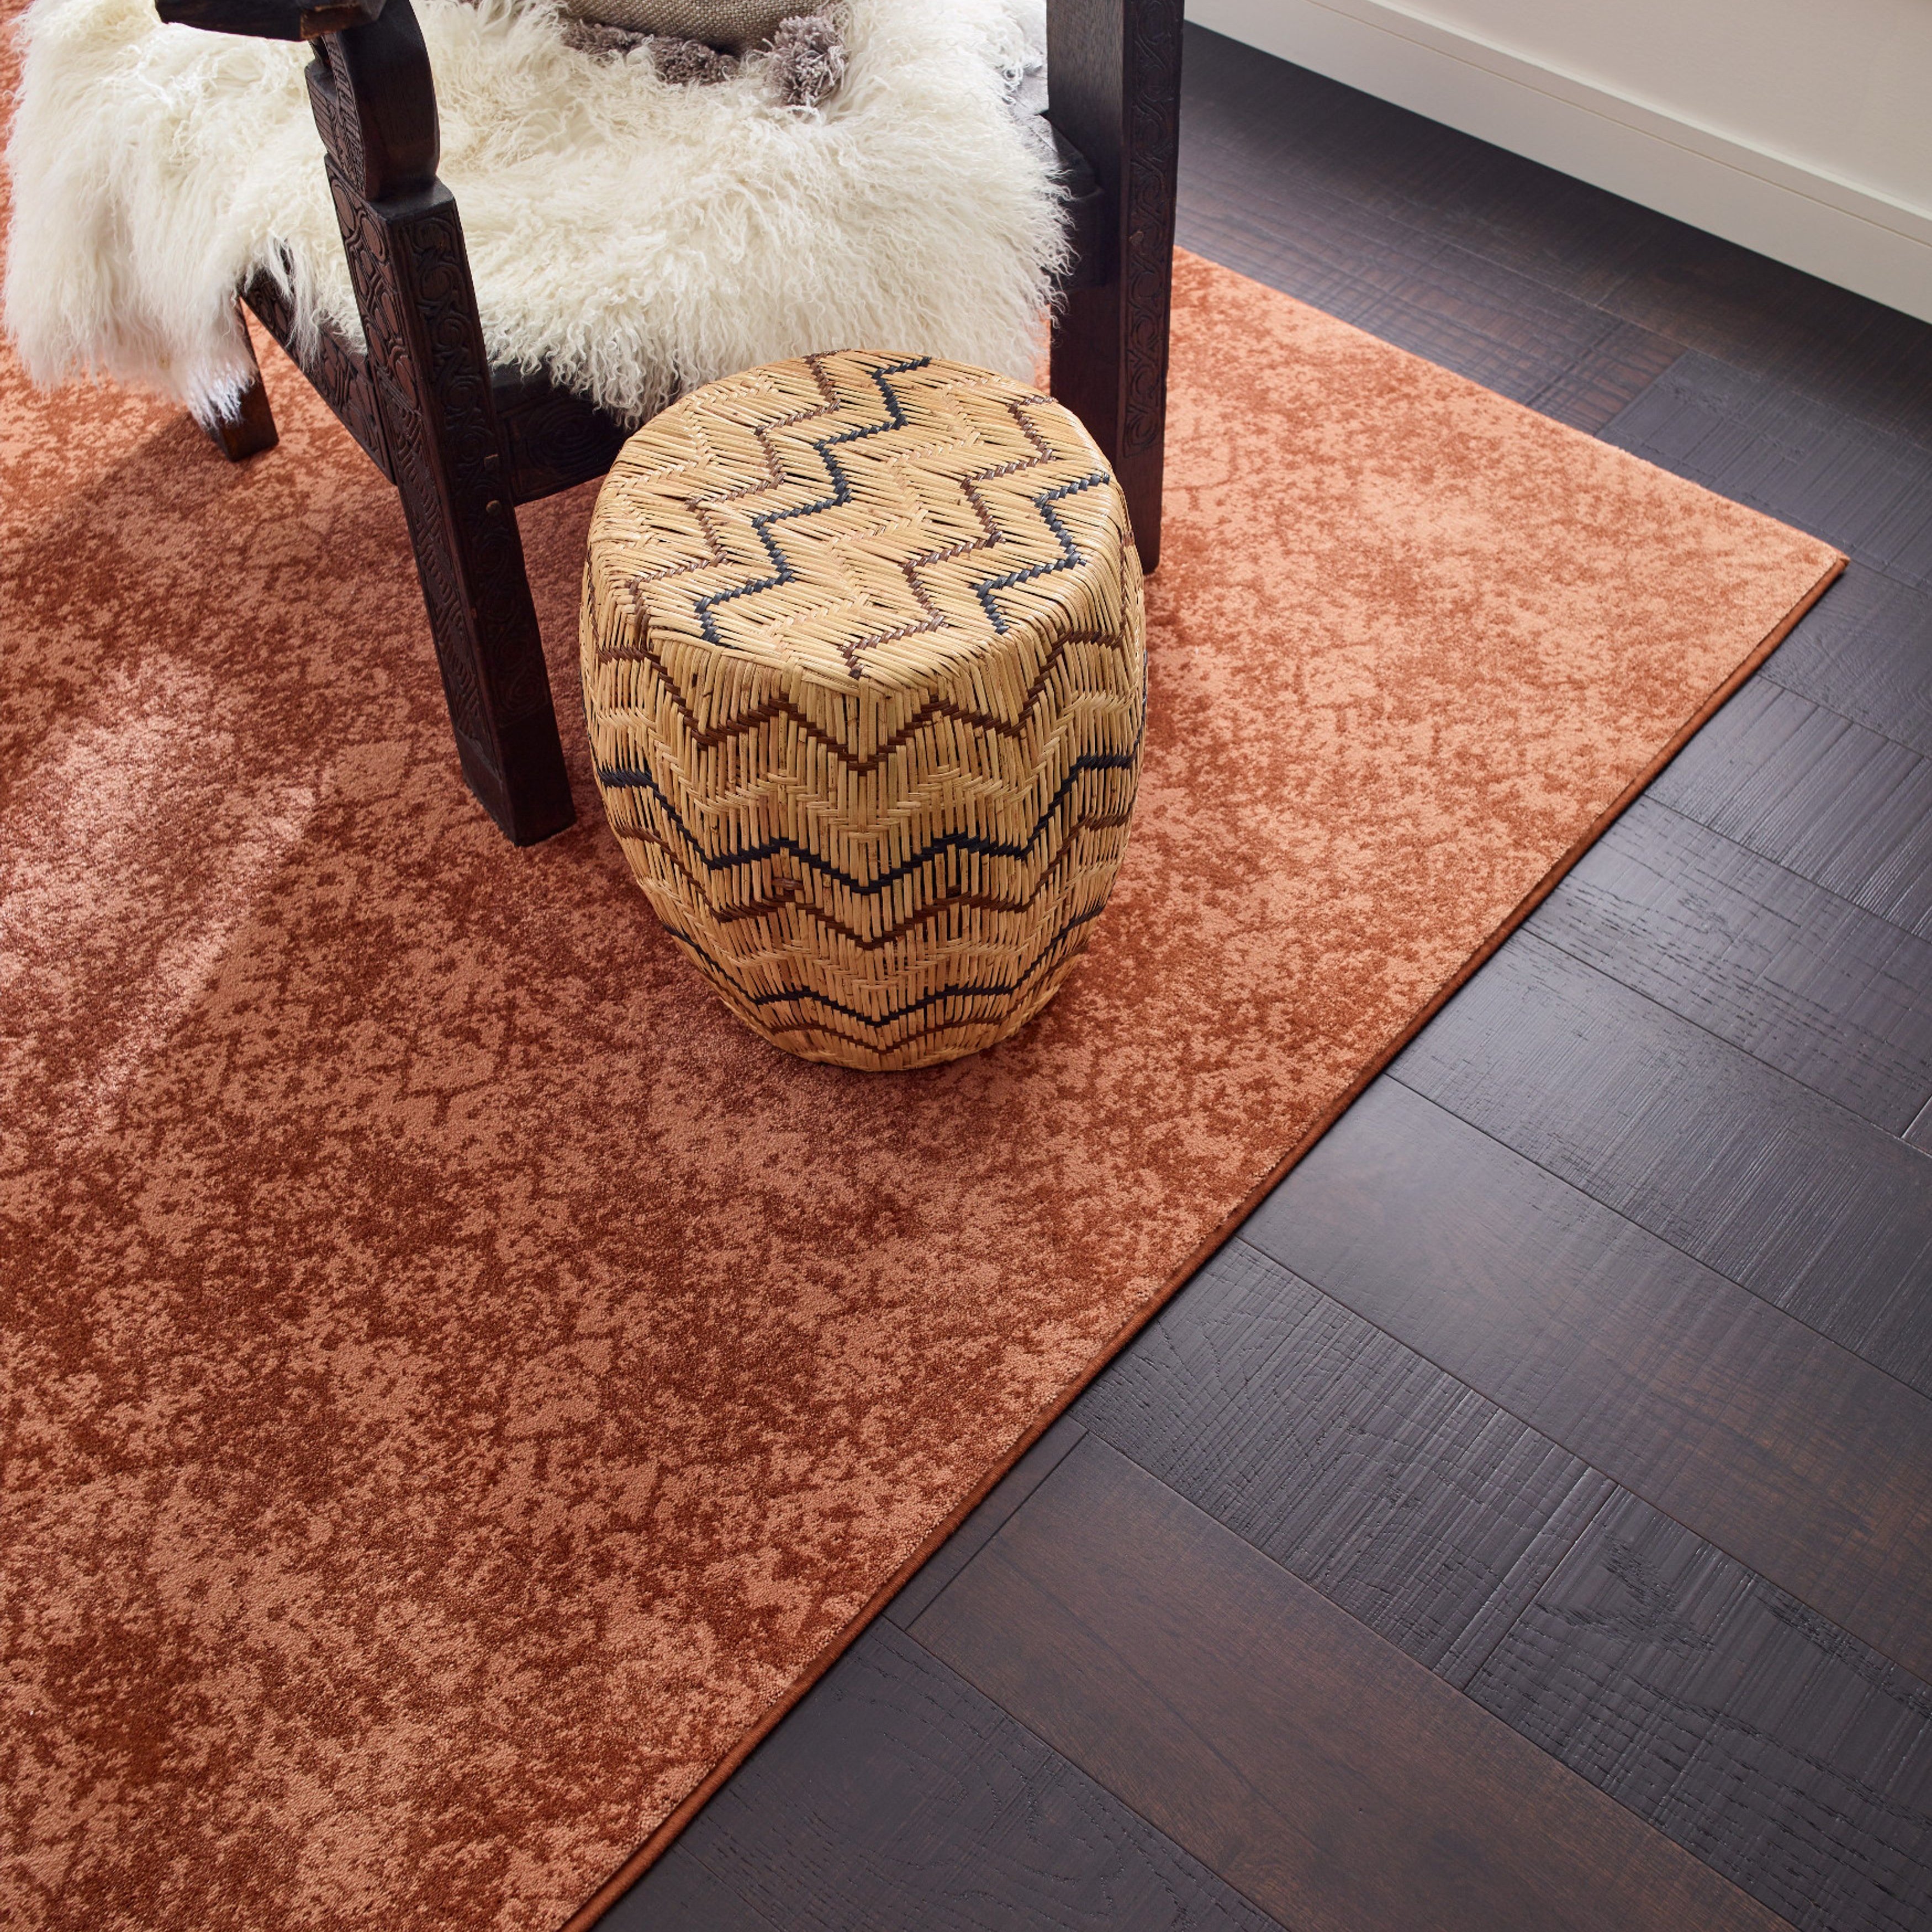 chair on area rug - Carpet Binding in Auburn